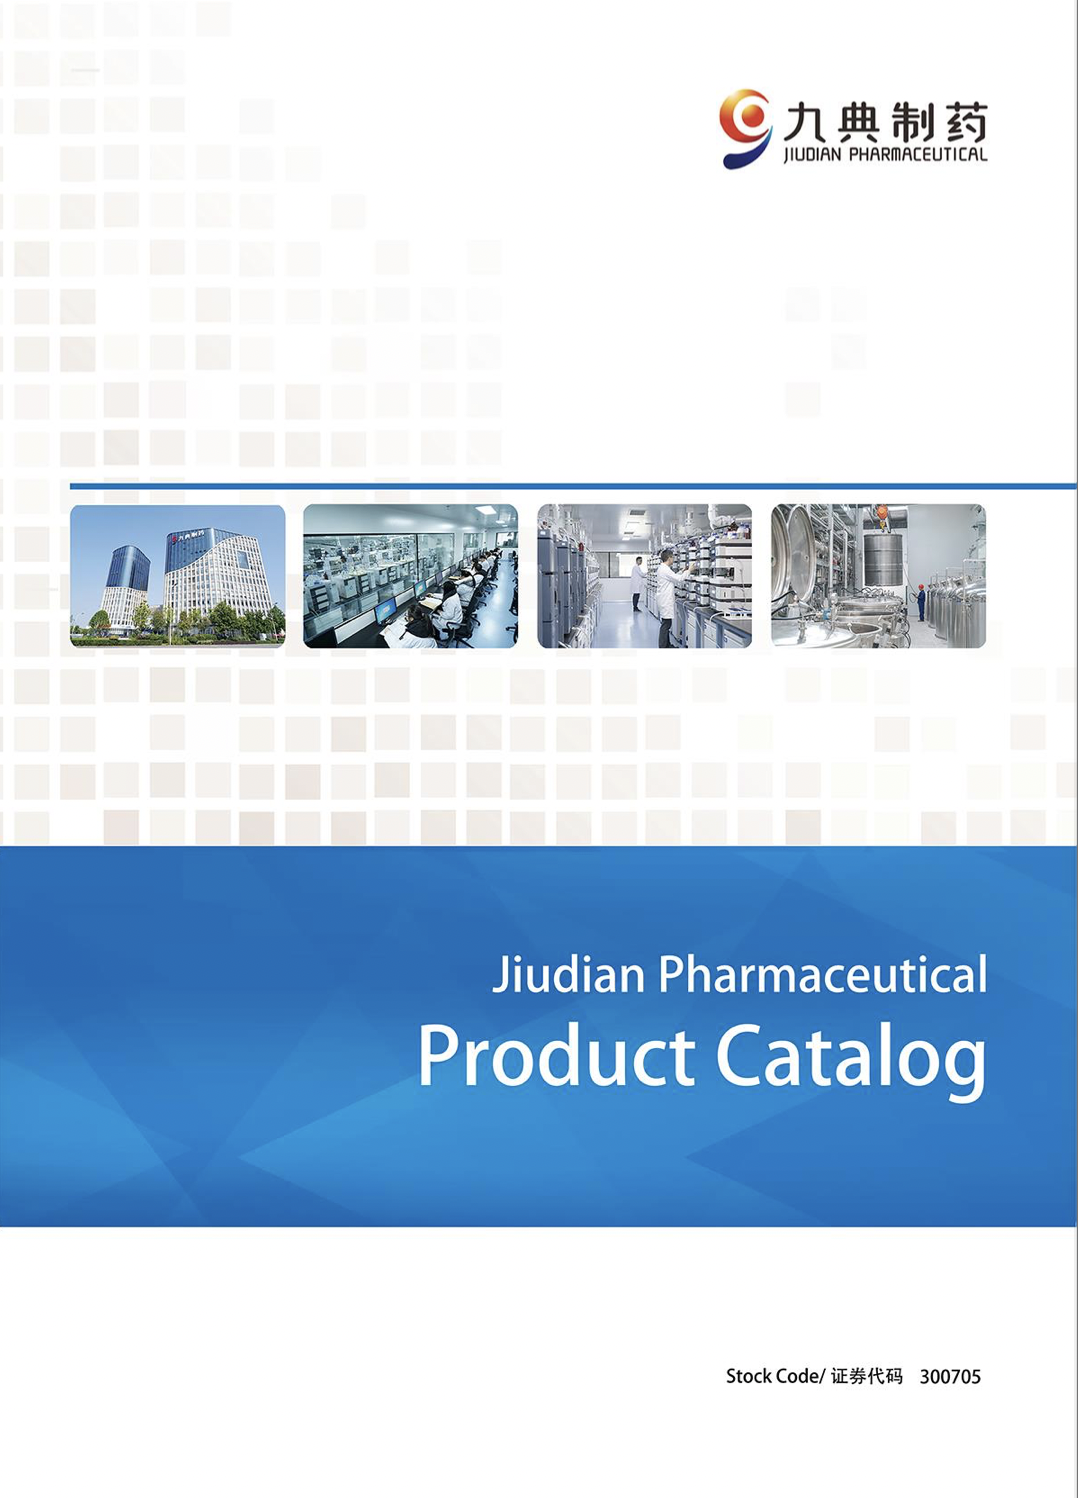 Jiudian Pharmaceutical welcome your communication!